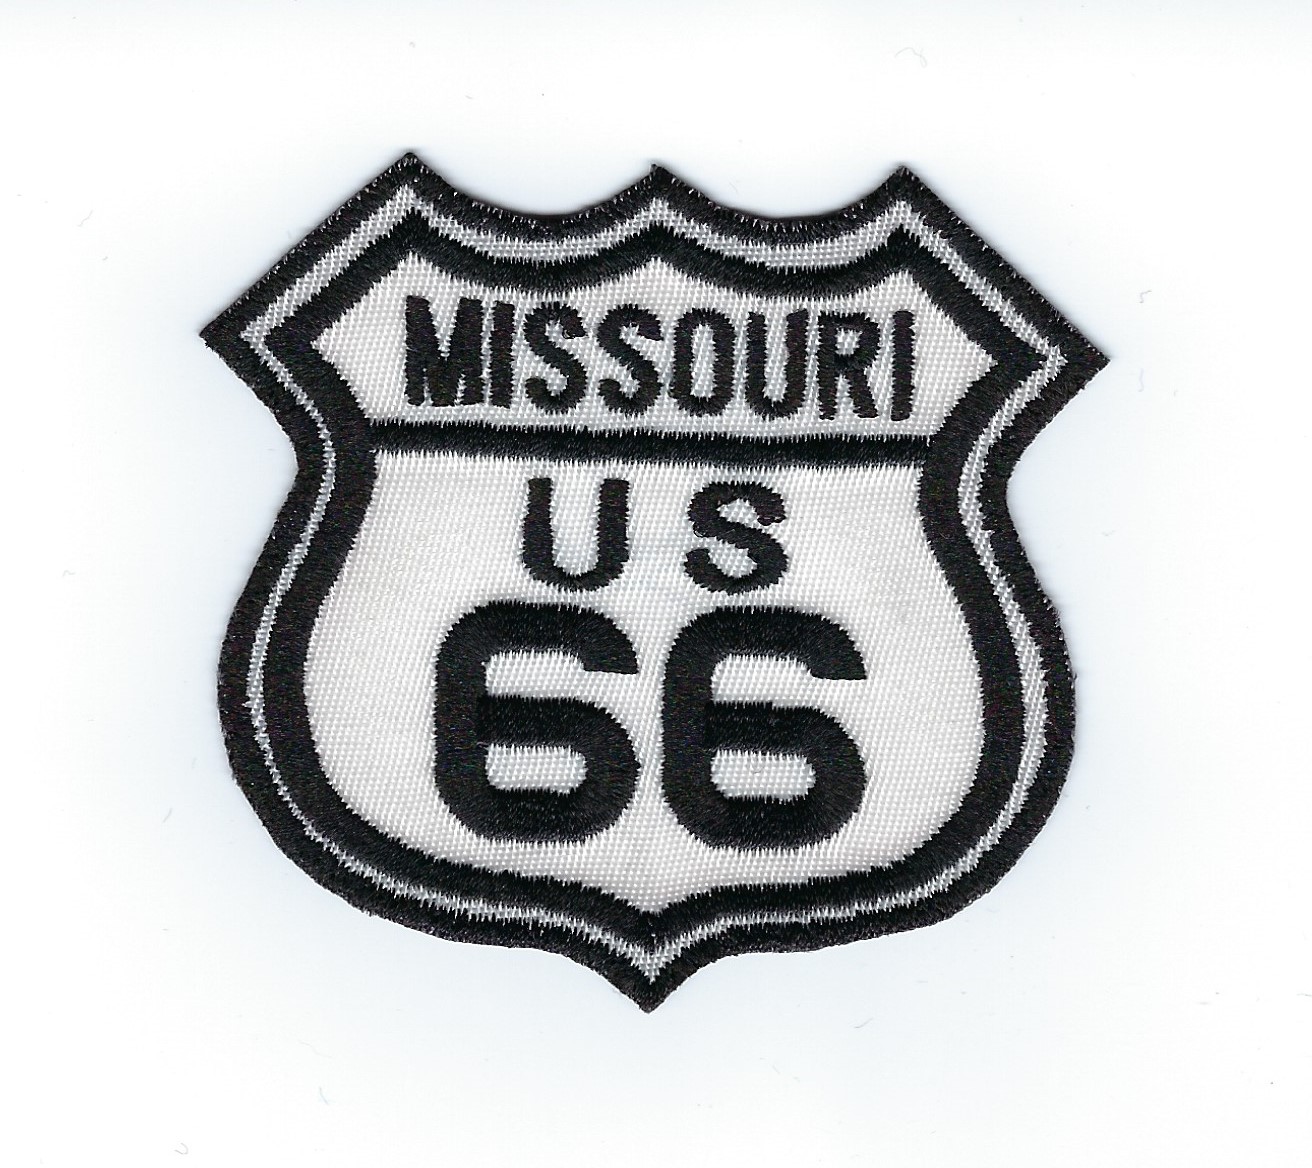 Route 66 Missouri US patch, black & white street sign design, 3" x 2.8"